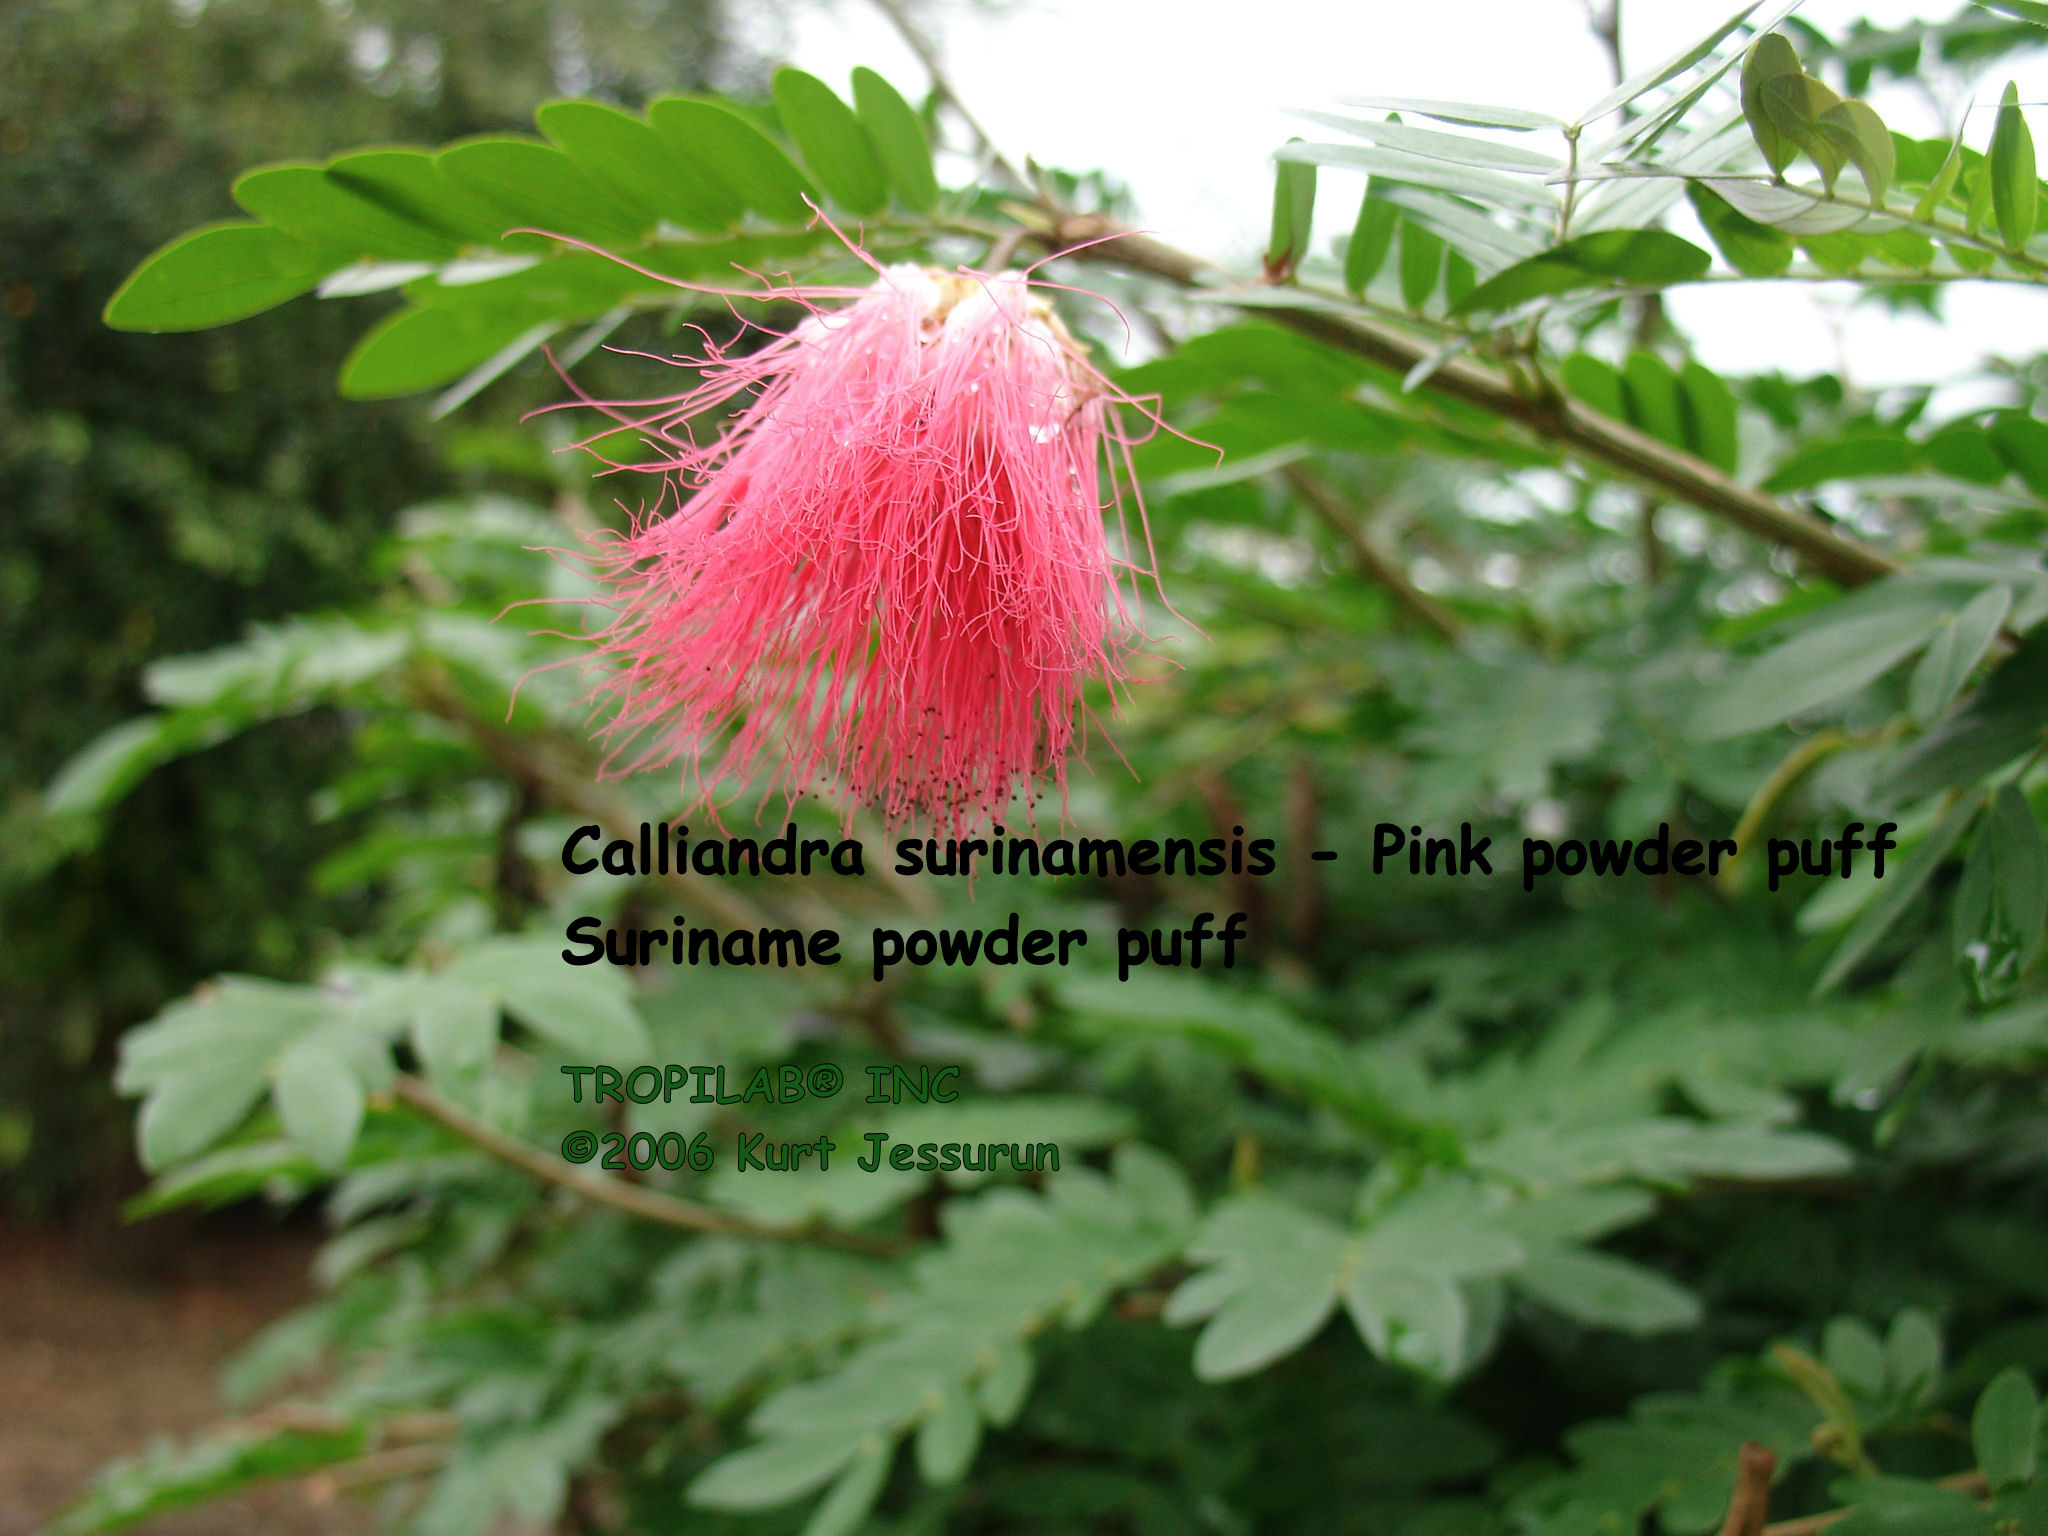 Calliandra surinamensis - Surinam powder puff